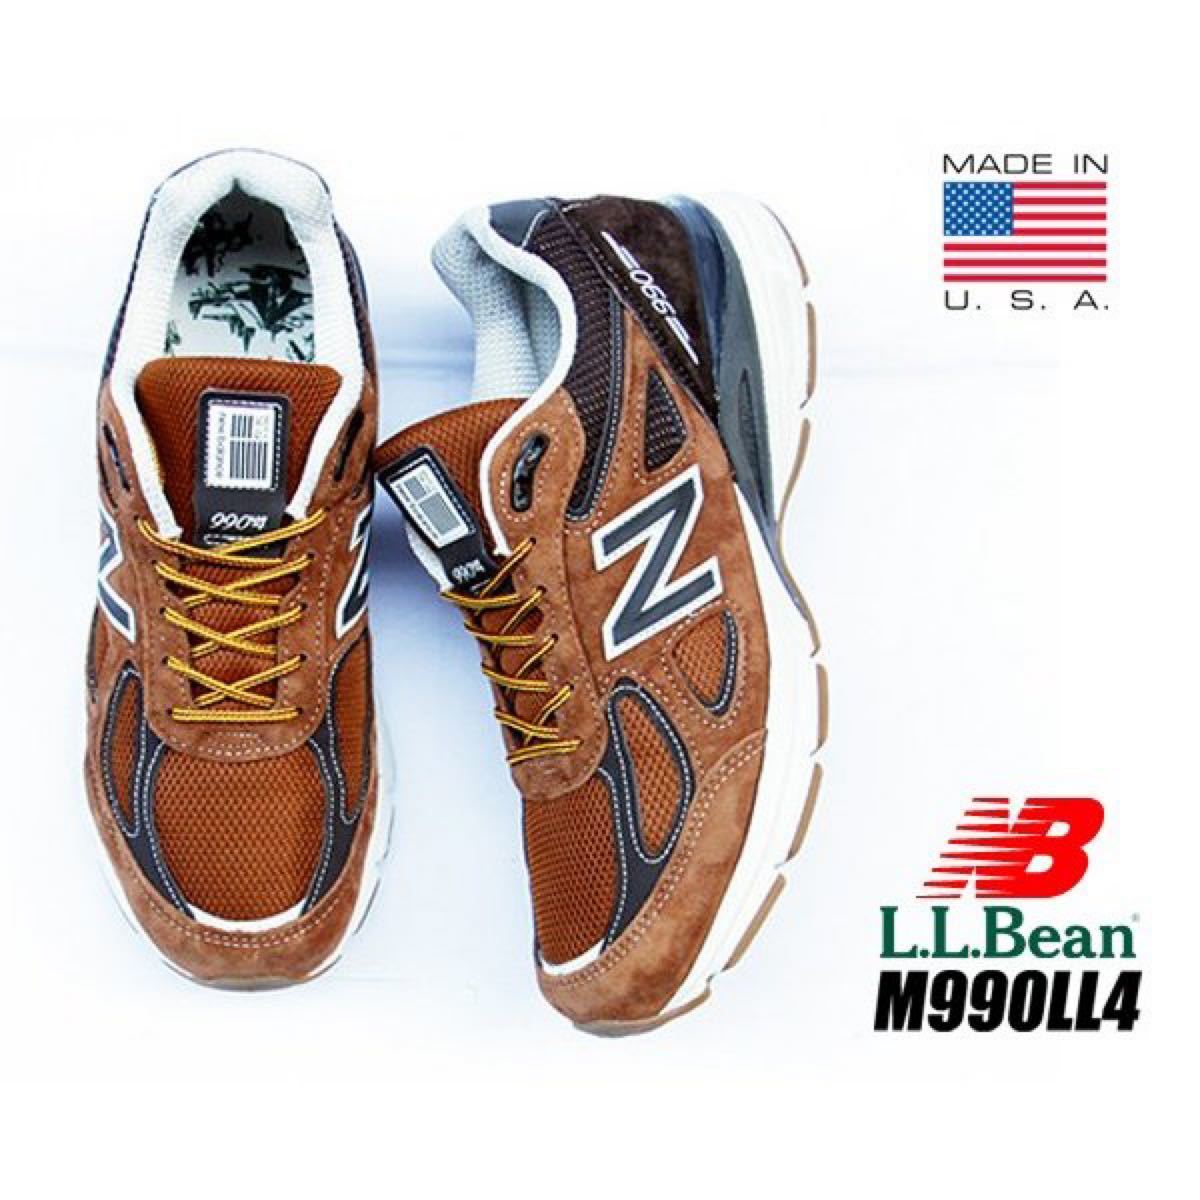 L.L.Bean・New Balance M990LL4 MADE IN USA